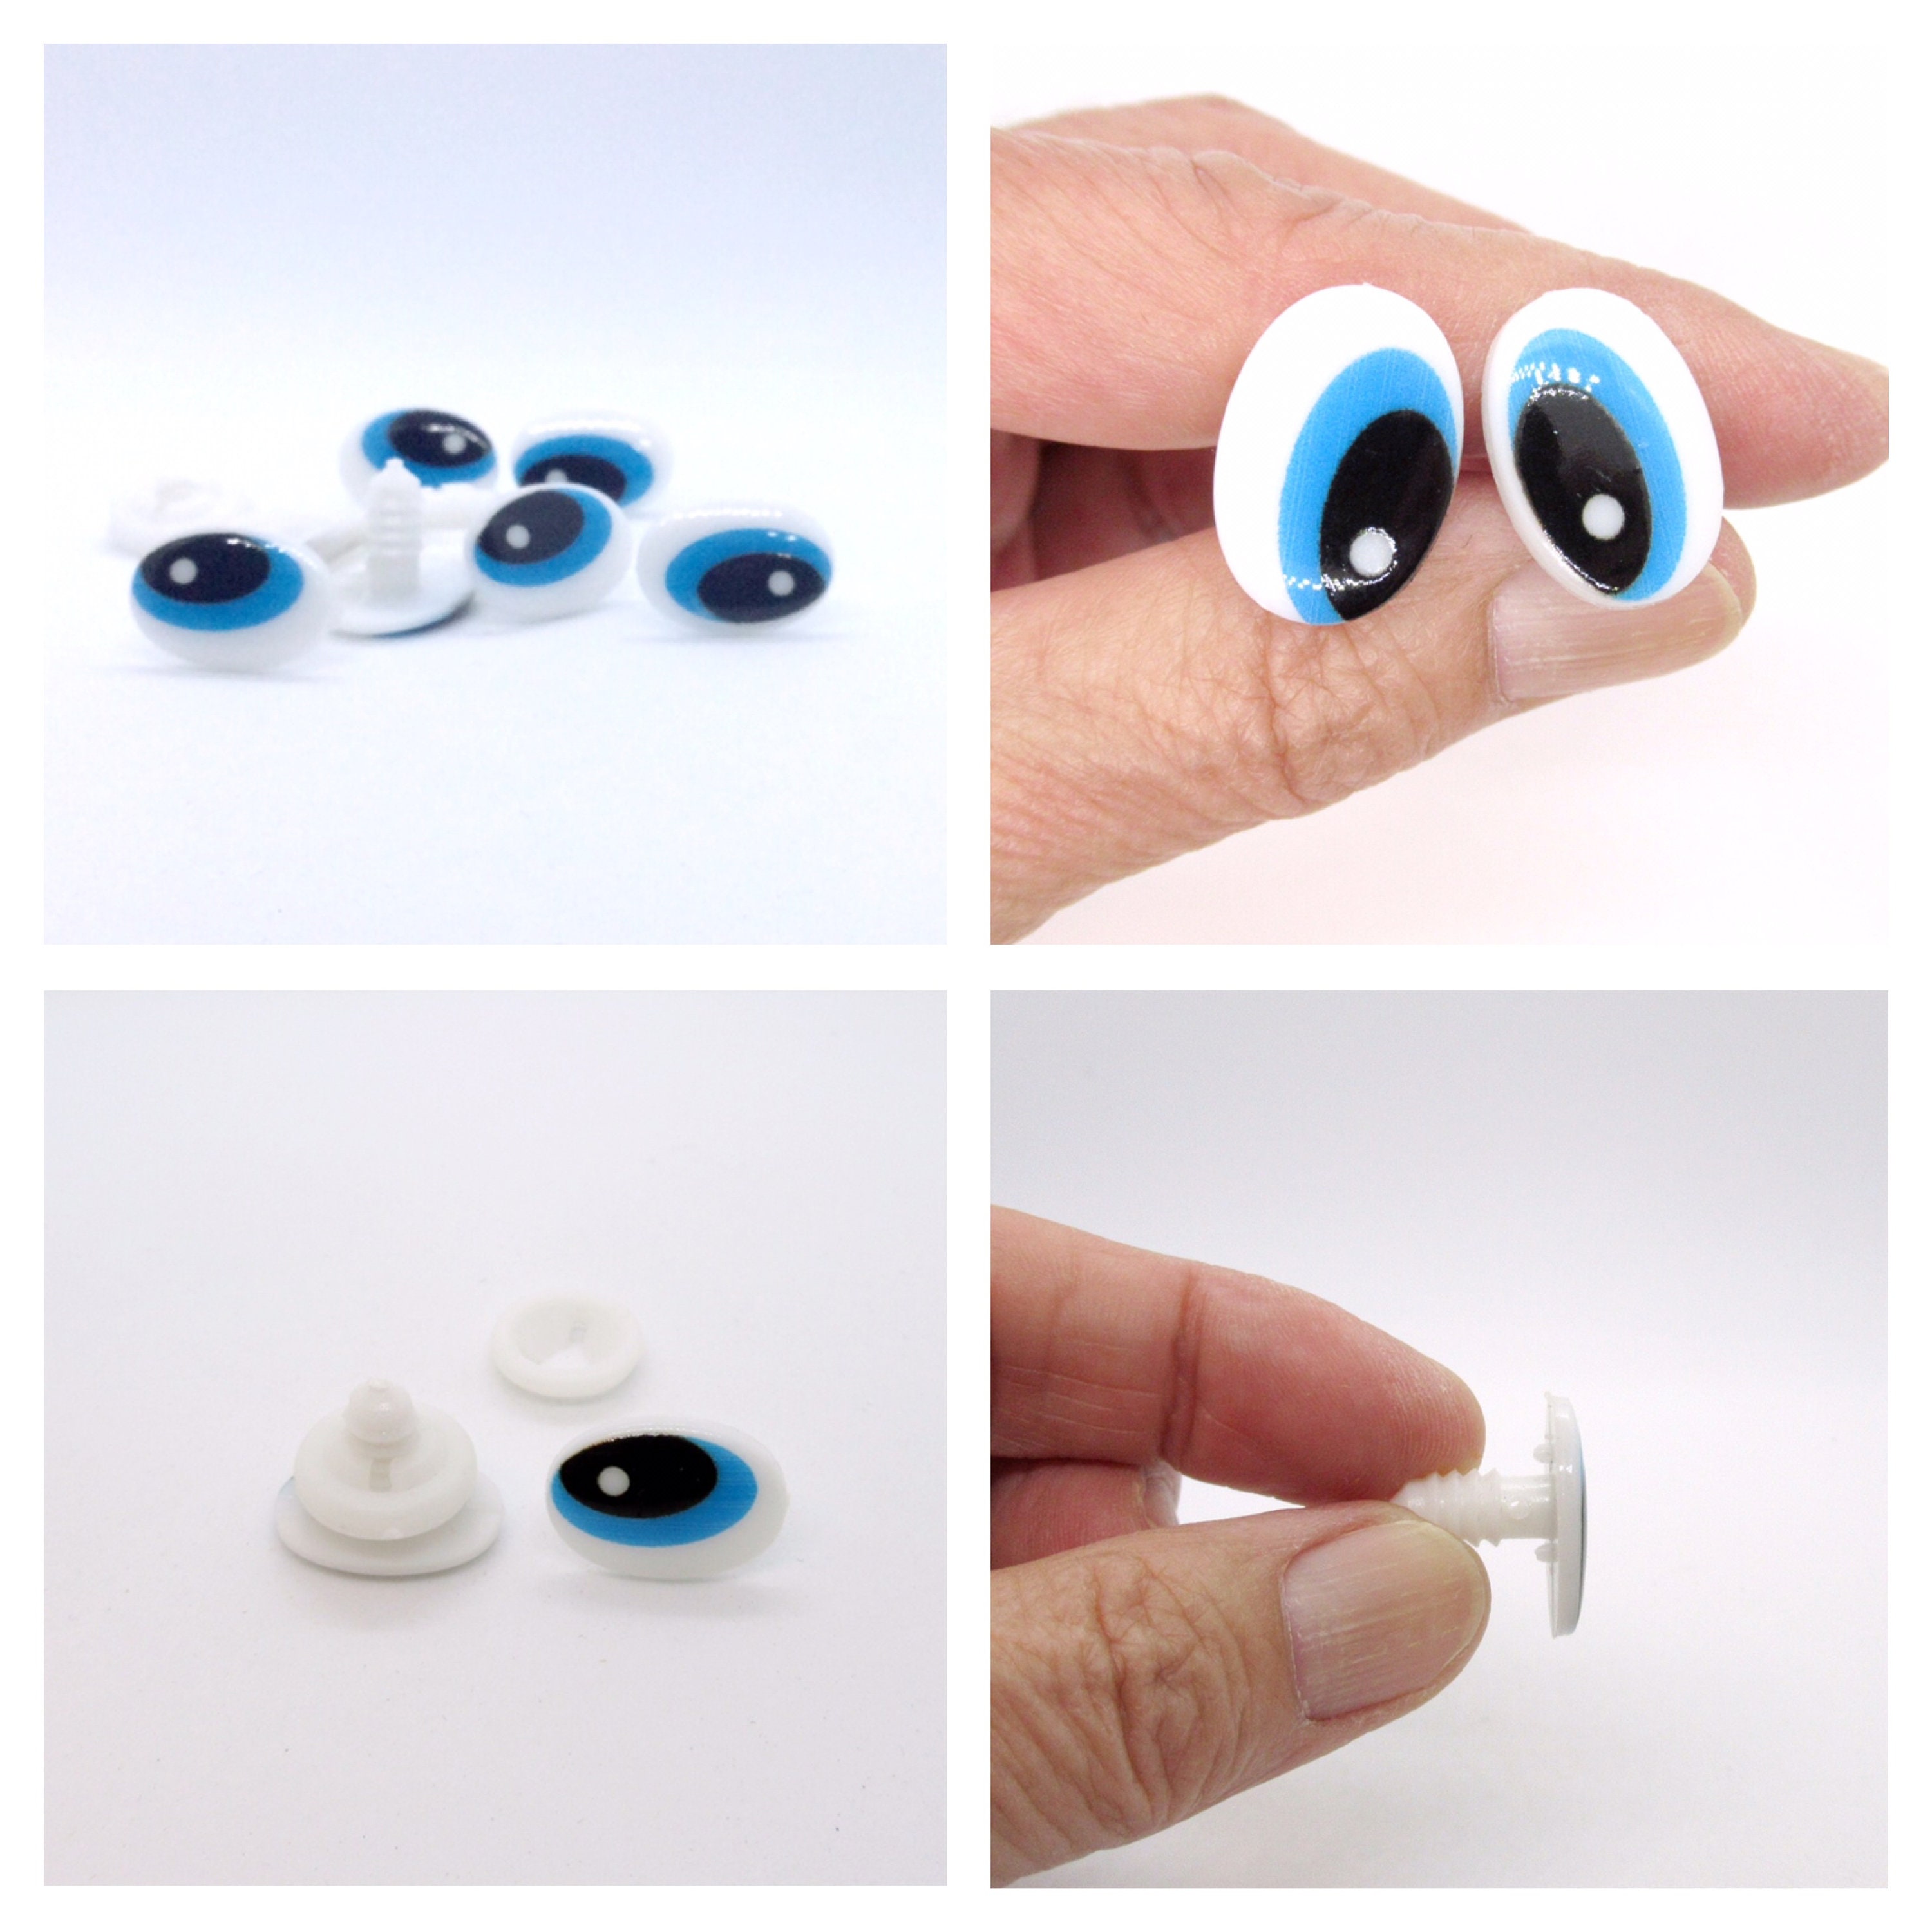 18mmx13mm(C) Oval Comic Eyes/Safety Eyes/Printed Eyes - Blue Black - 6 Pairs